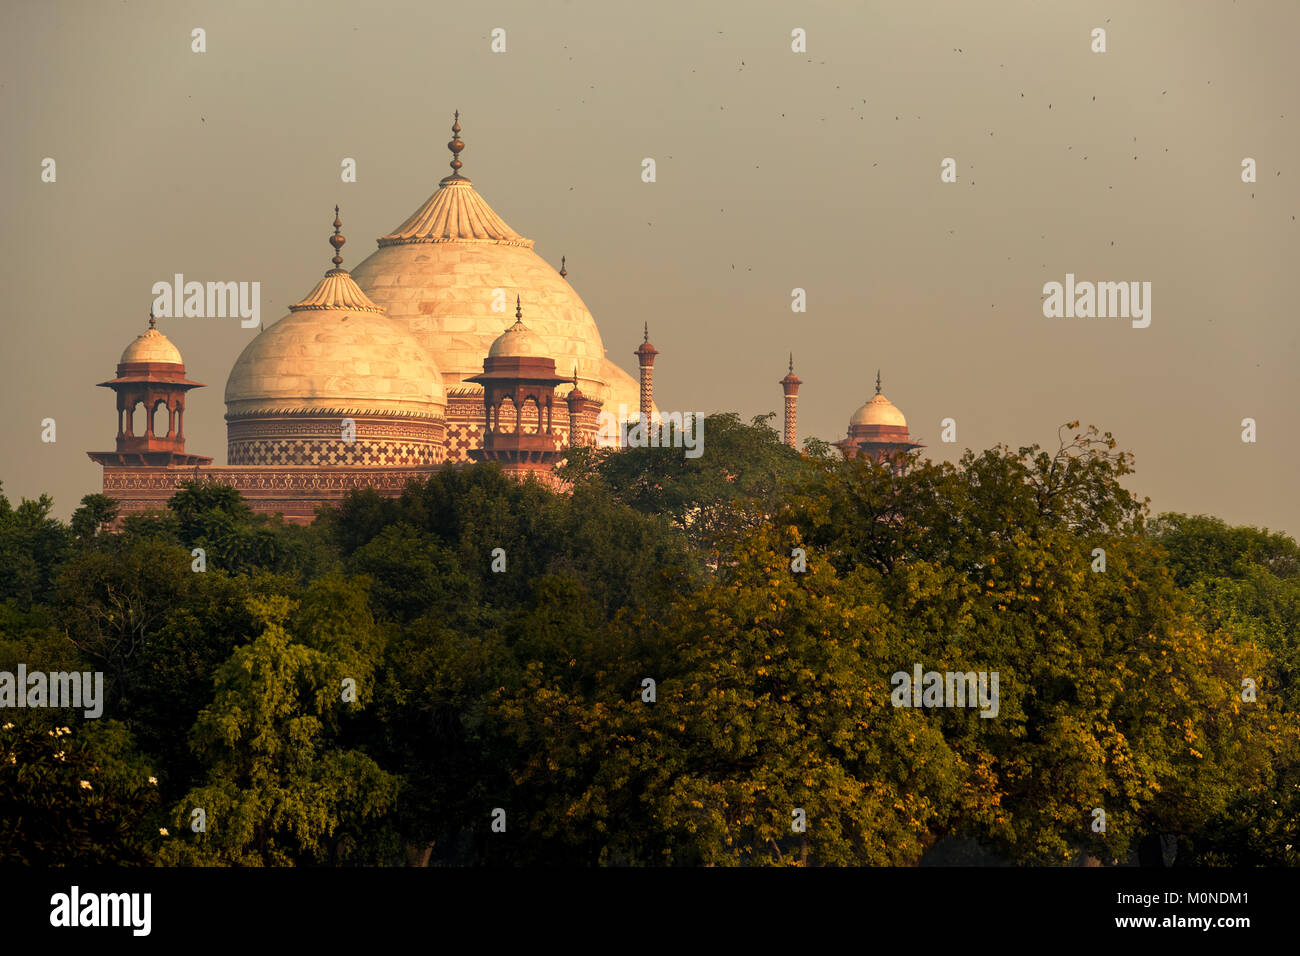 Architecture in the garden of Taj Mahal, Agra, India Stock Photo